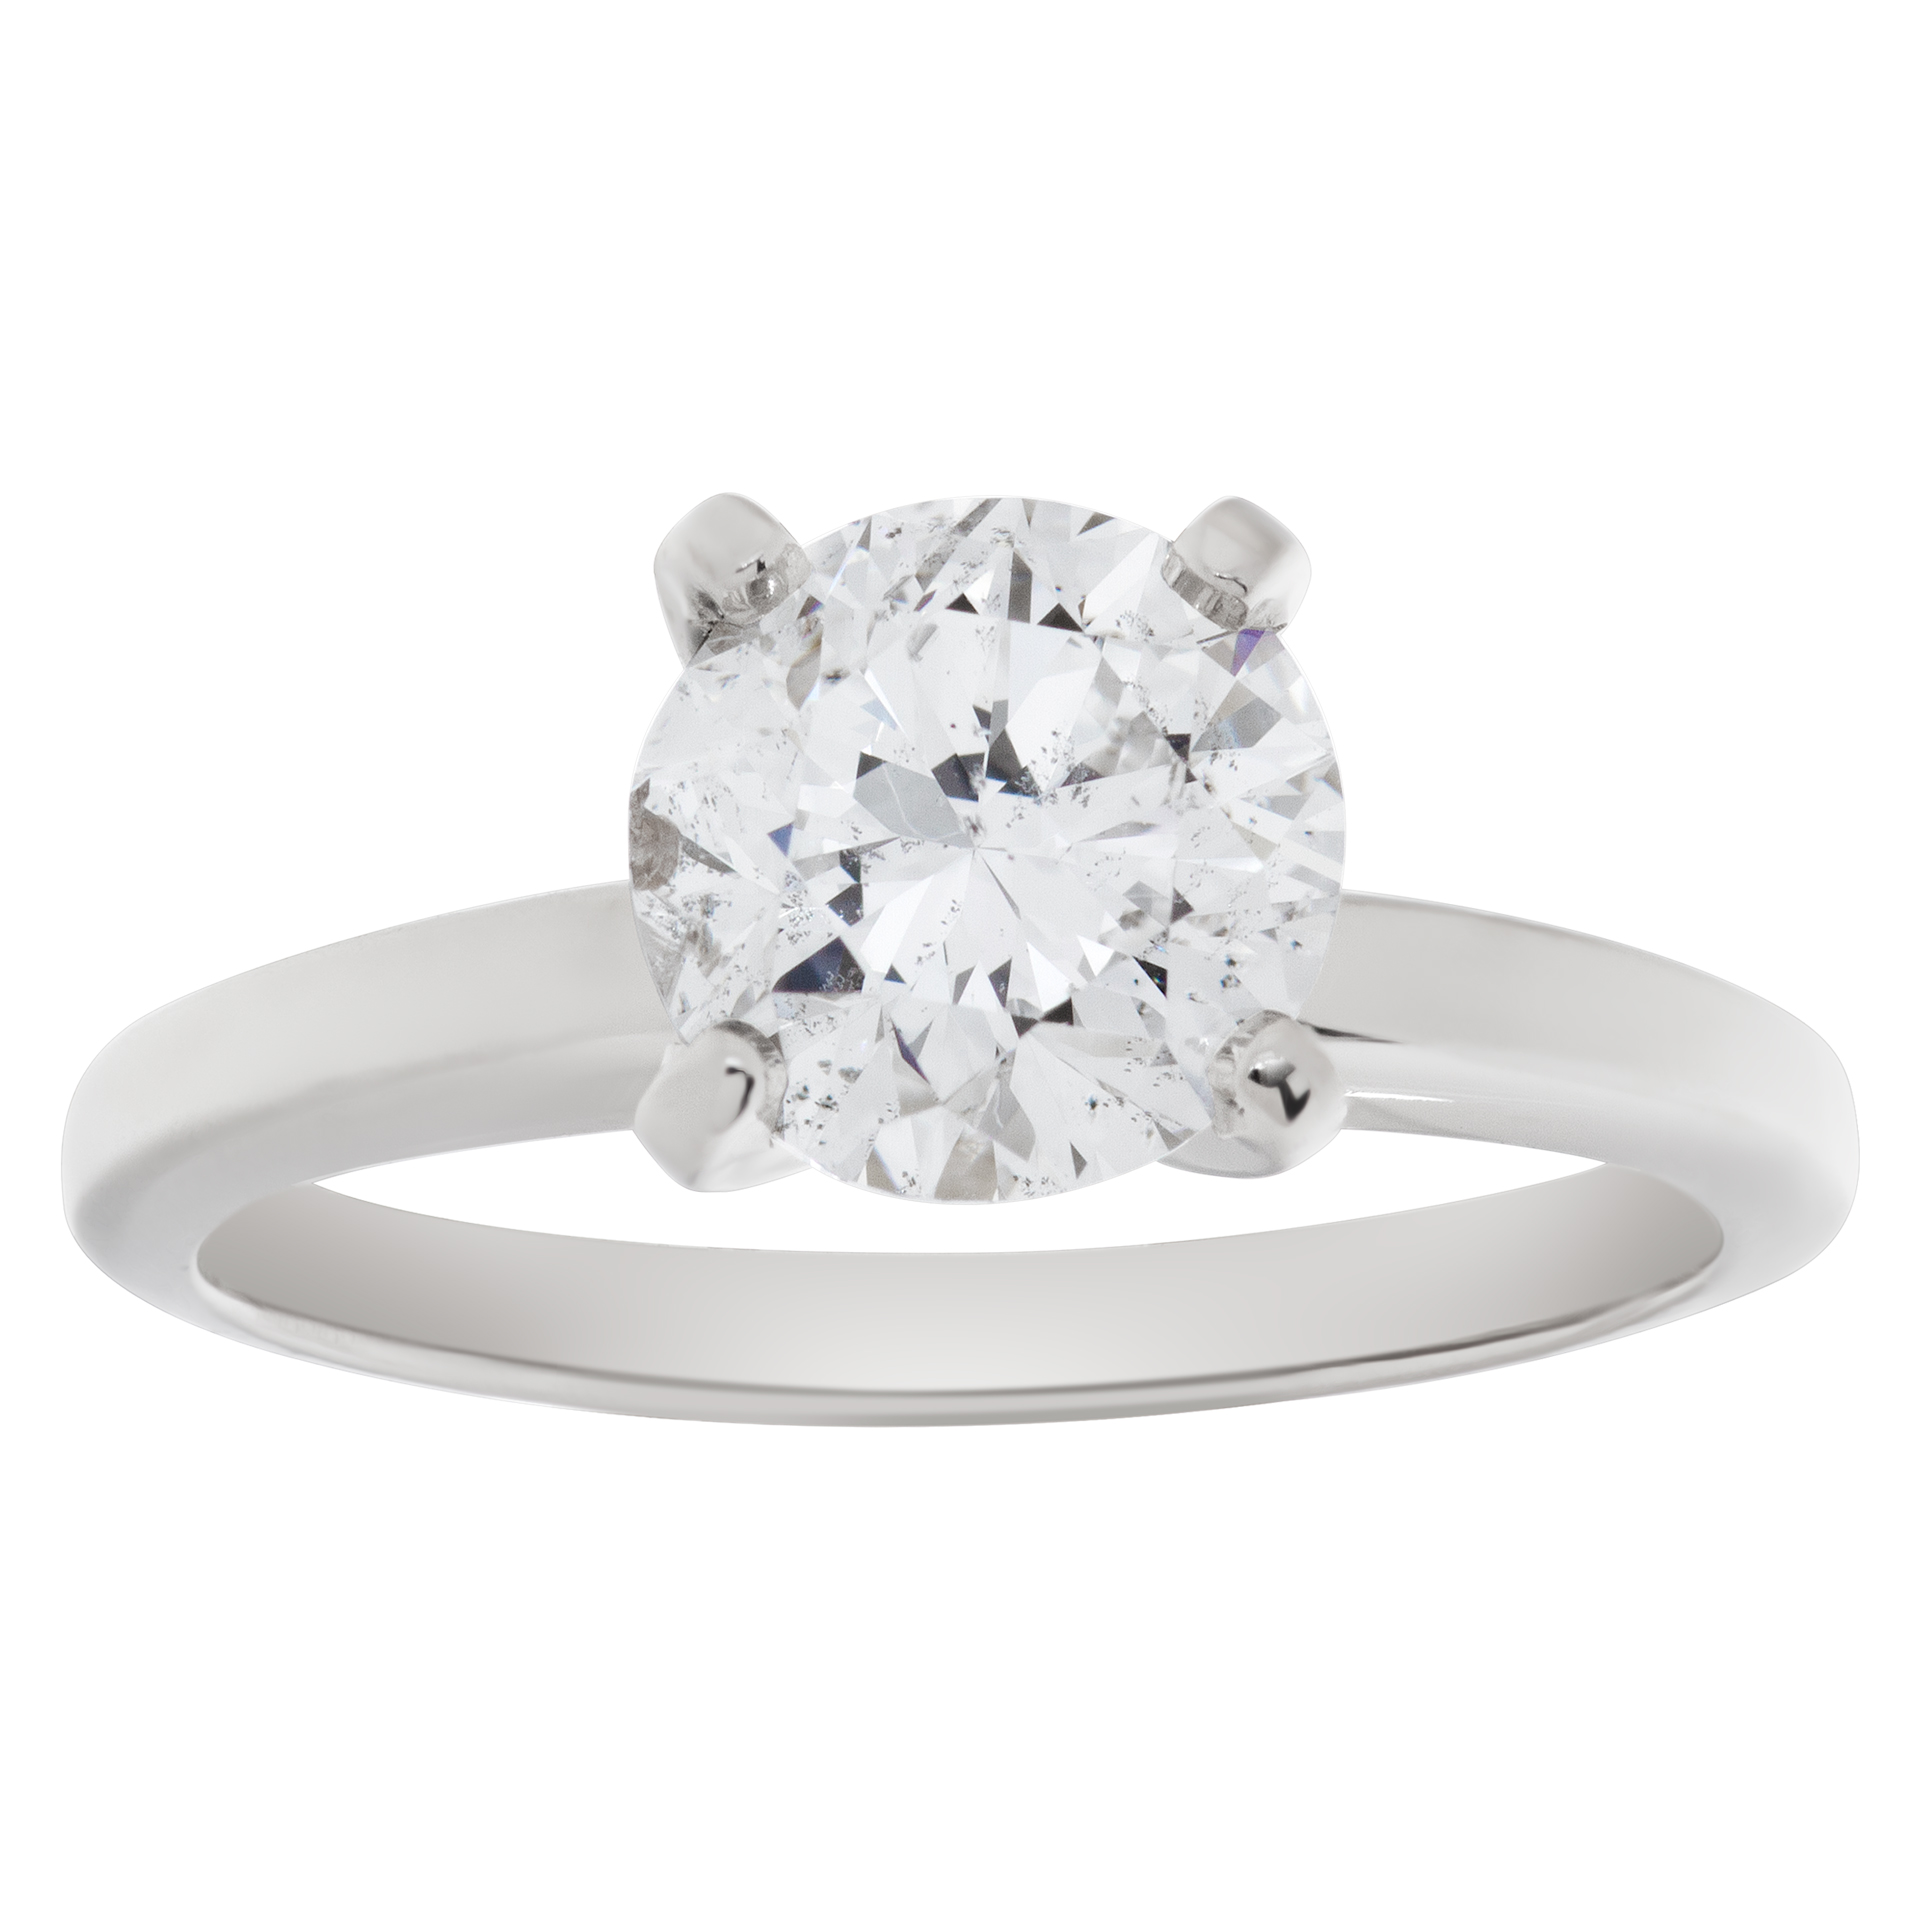 GIA certified round brilliant diamond 1.51 carat (G color, I1 clarity)